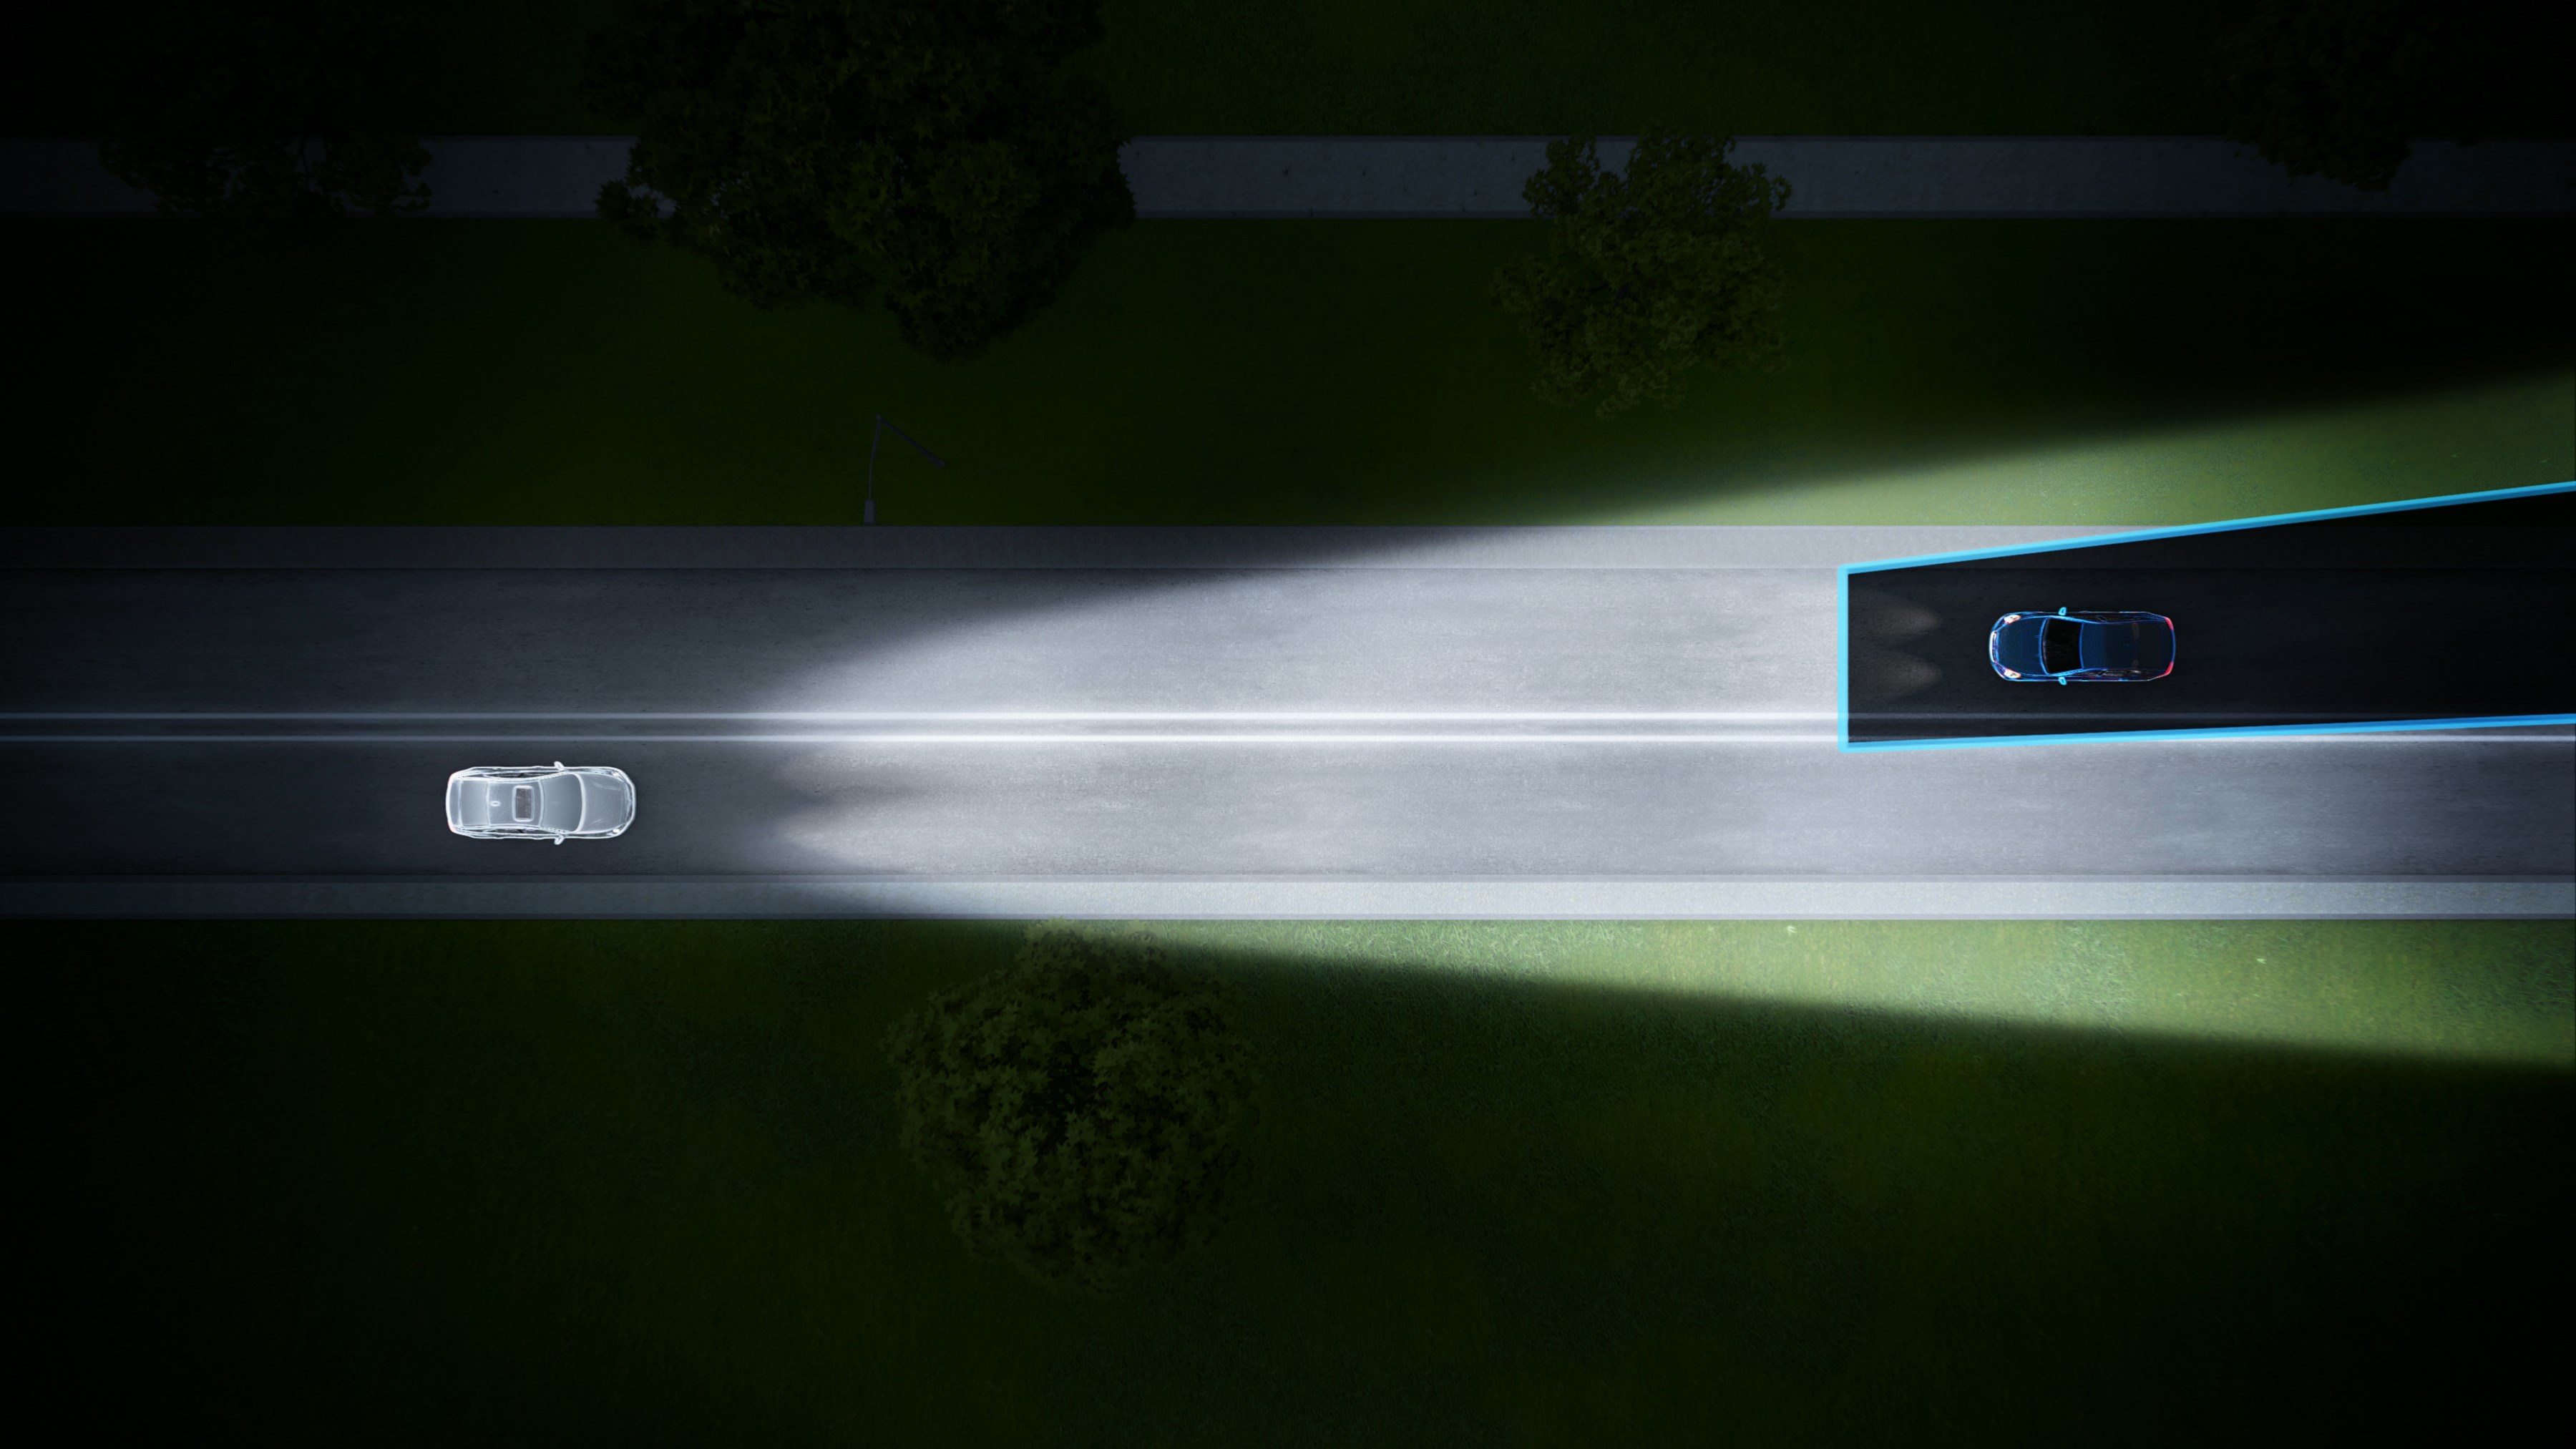 SUV Headlights, Apple Self-Driving, & Audi A8 Teaser